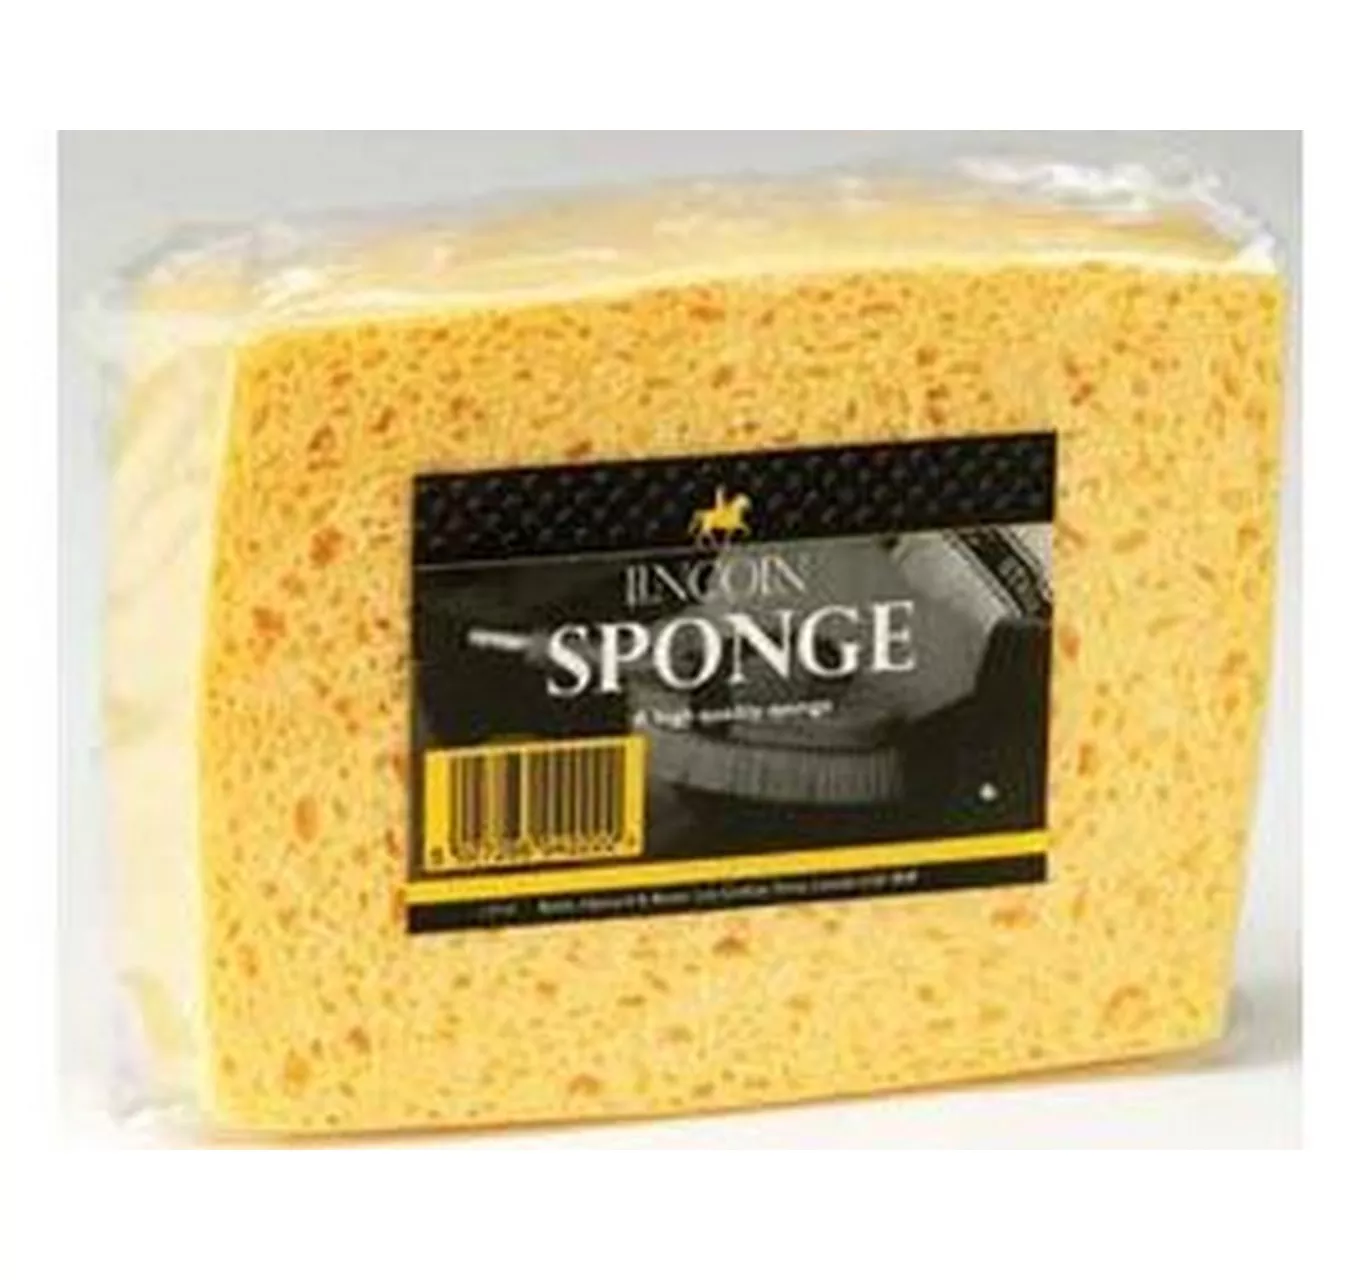 Sponge Lincoln